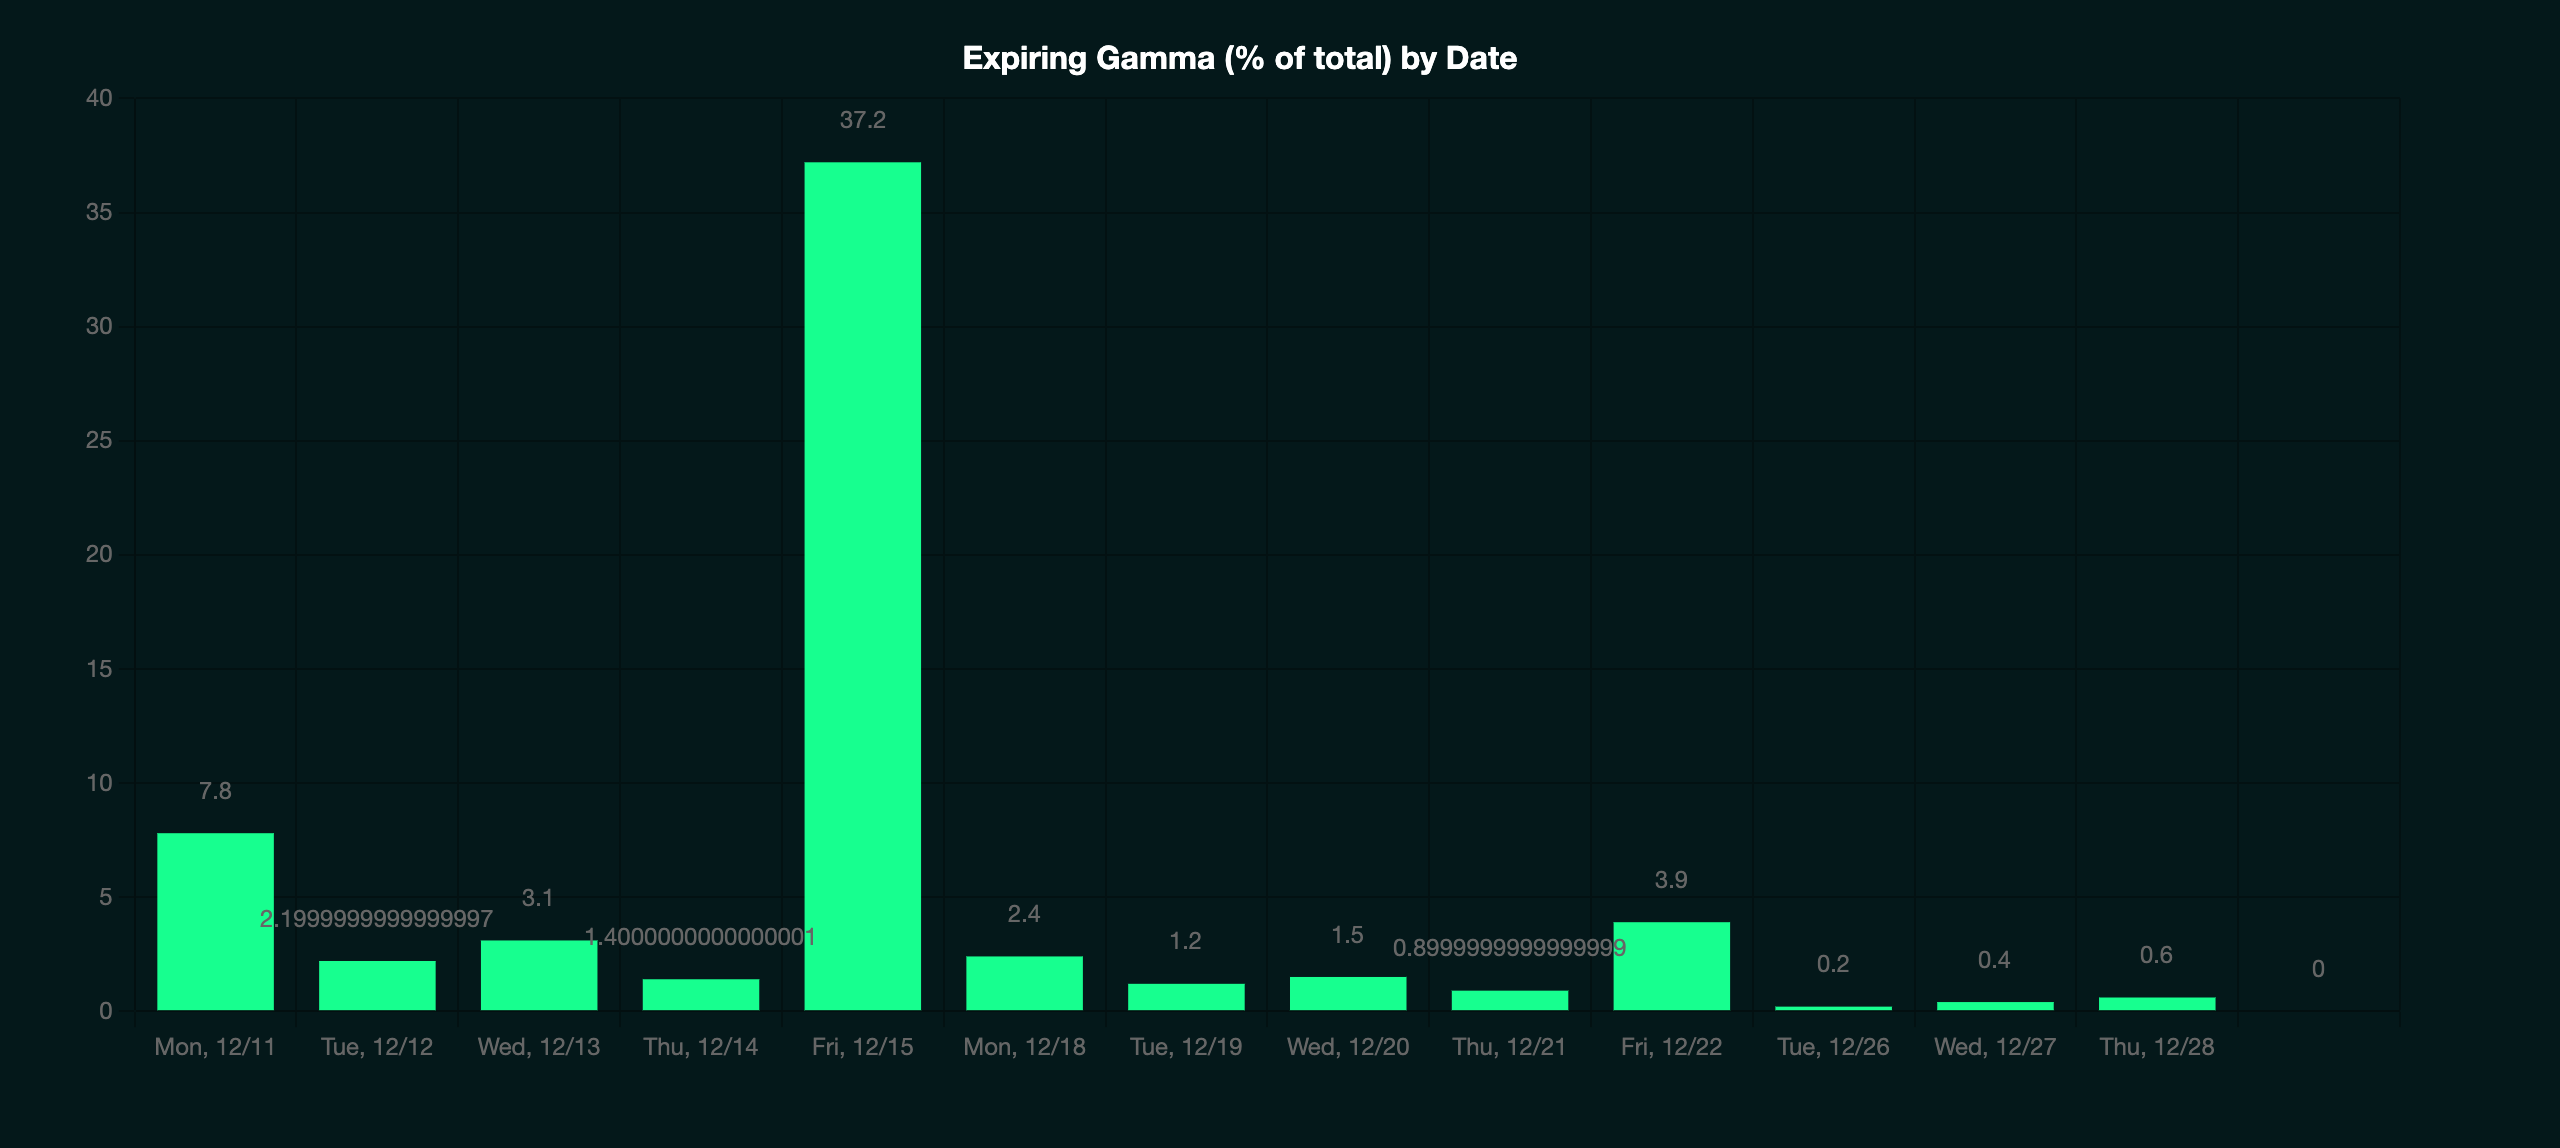 Expiring Gamma by Date